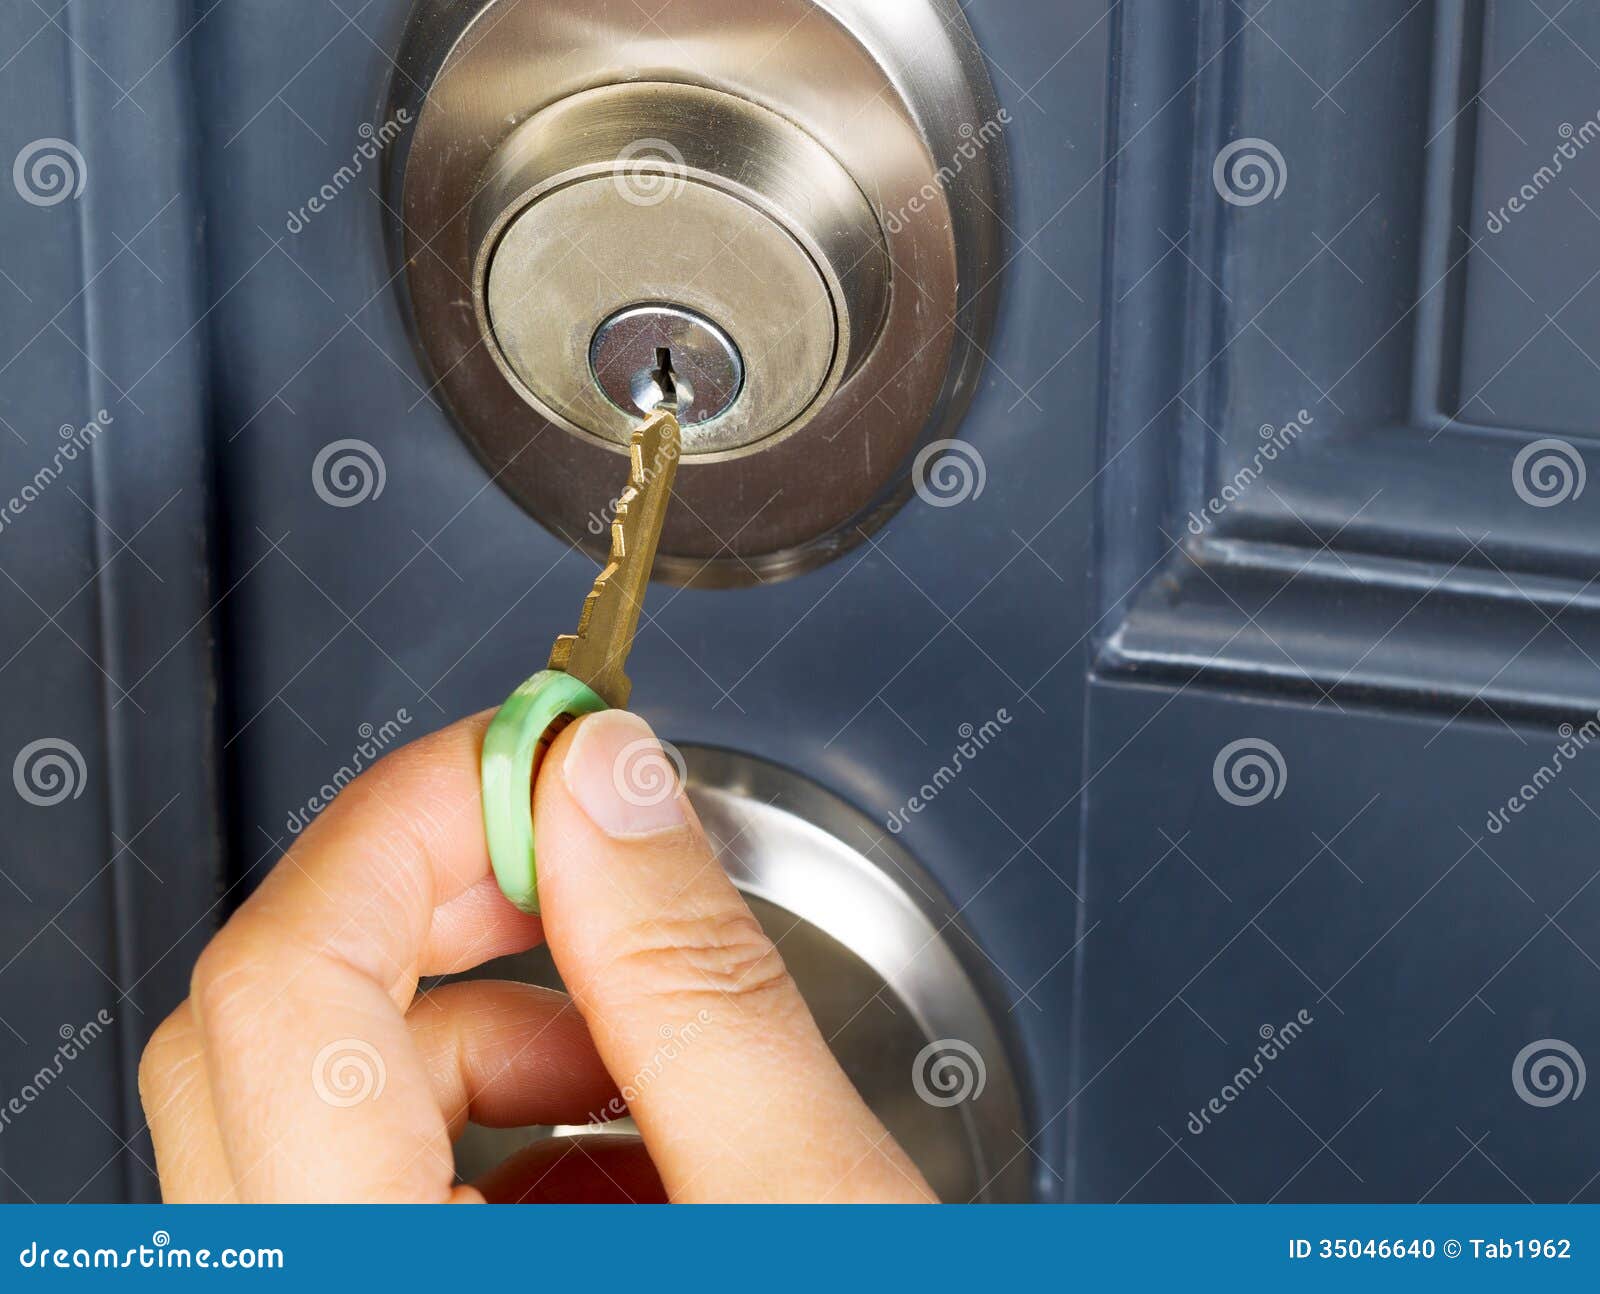 female hand putting house key into door lock